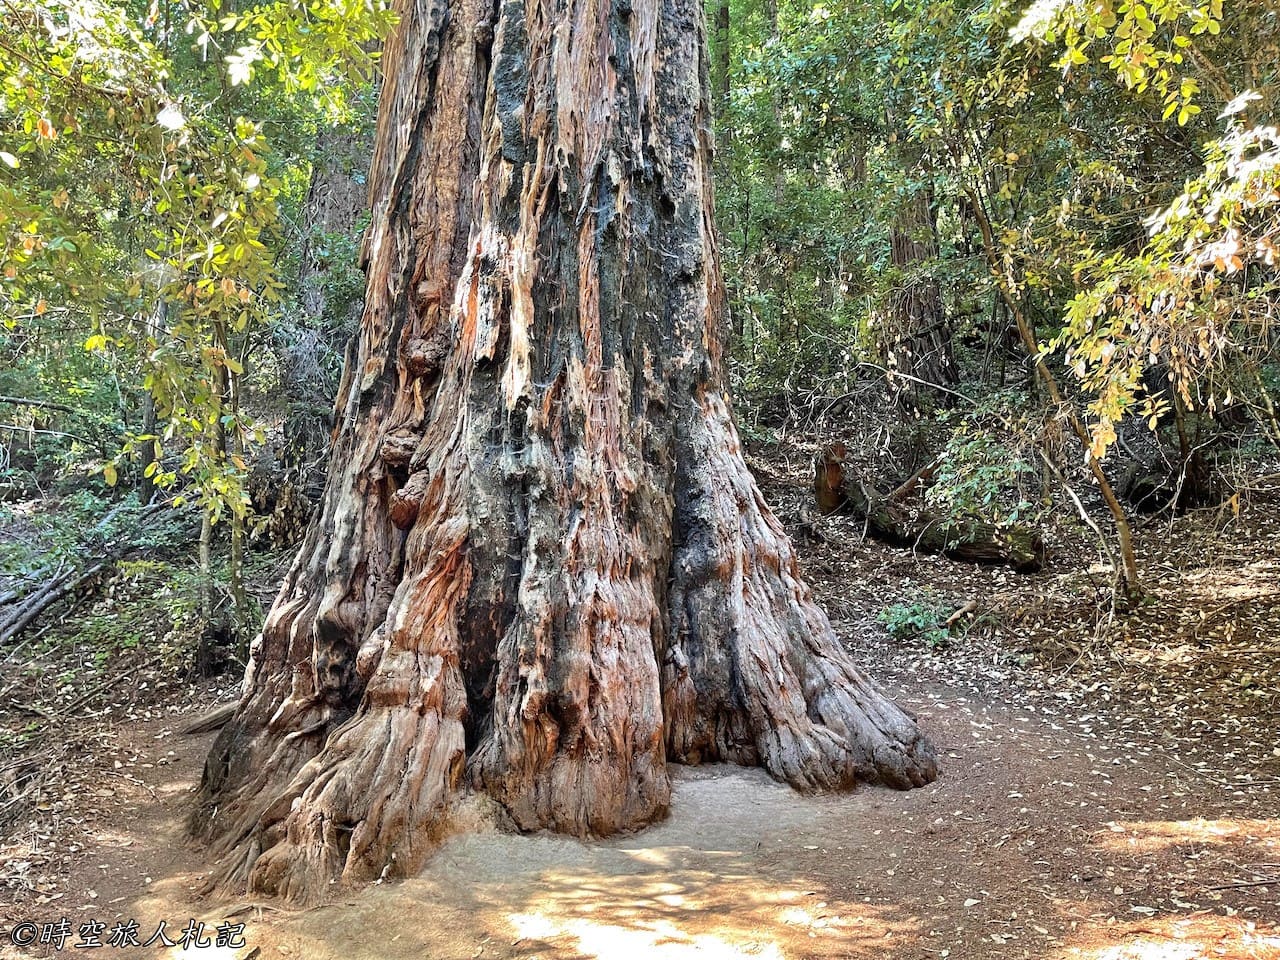 Portola redwood state park 17